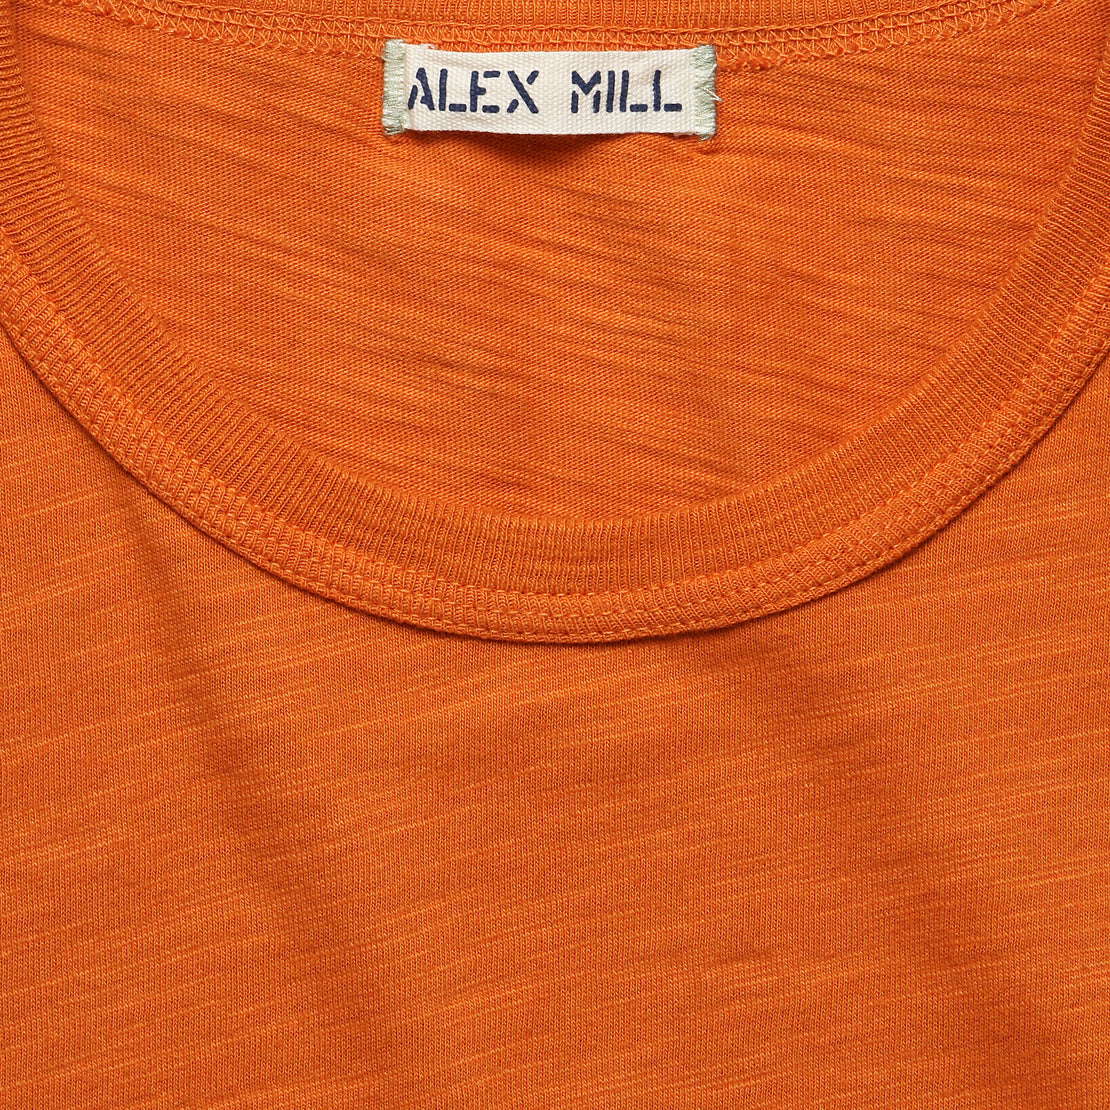 Standard Crew Tee - Autumn Orange - Alex Mill - STAG Provisions - Tops - S/S Tee